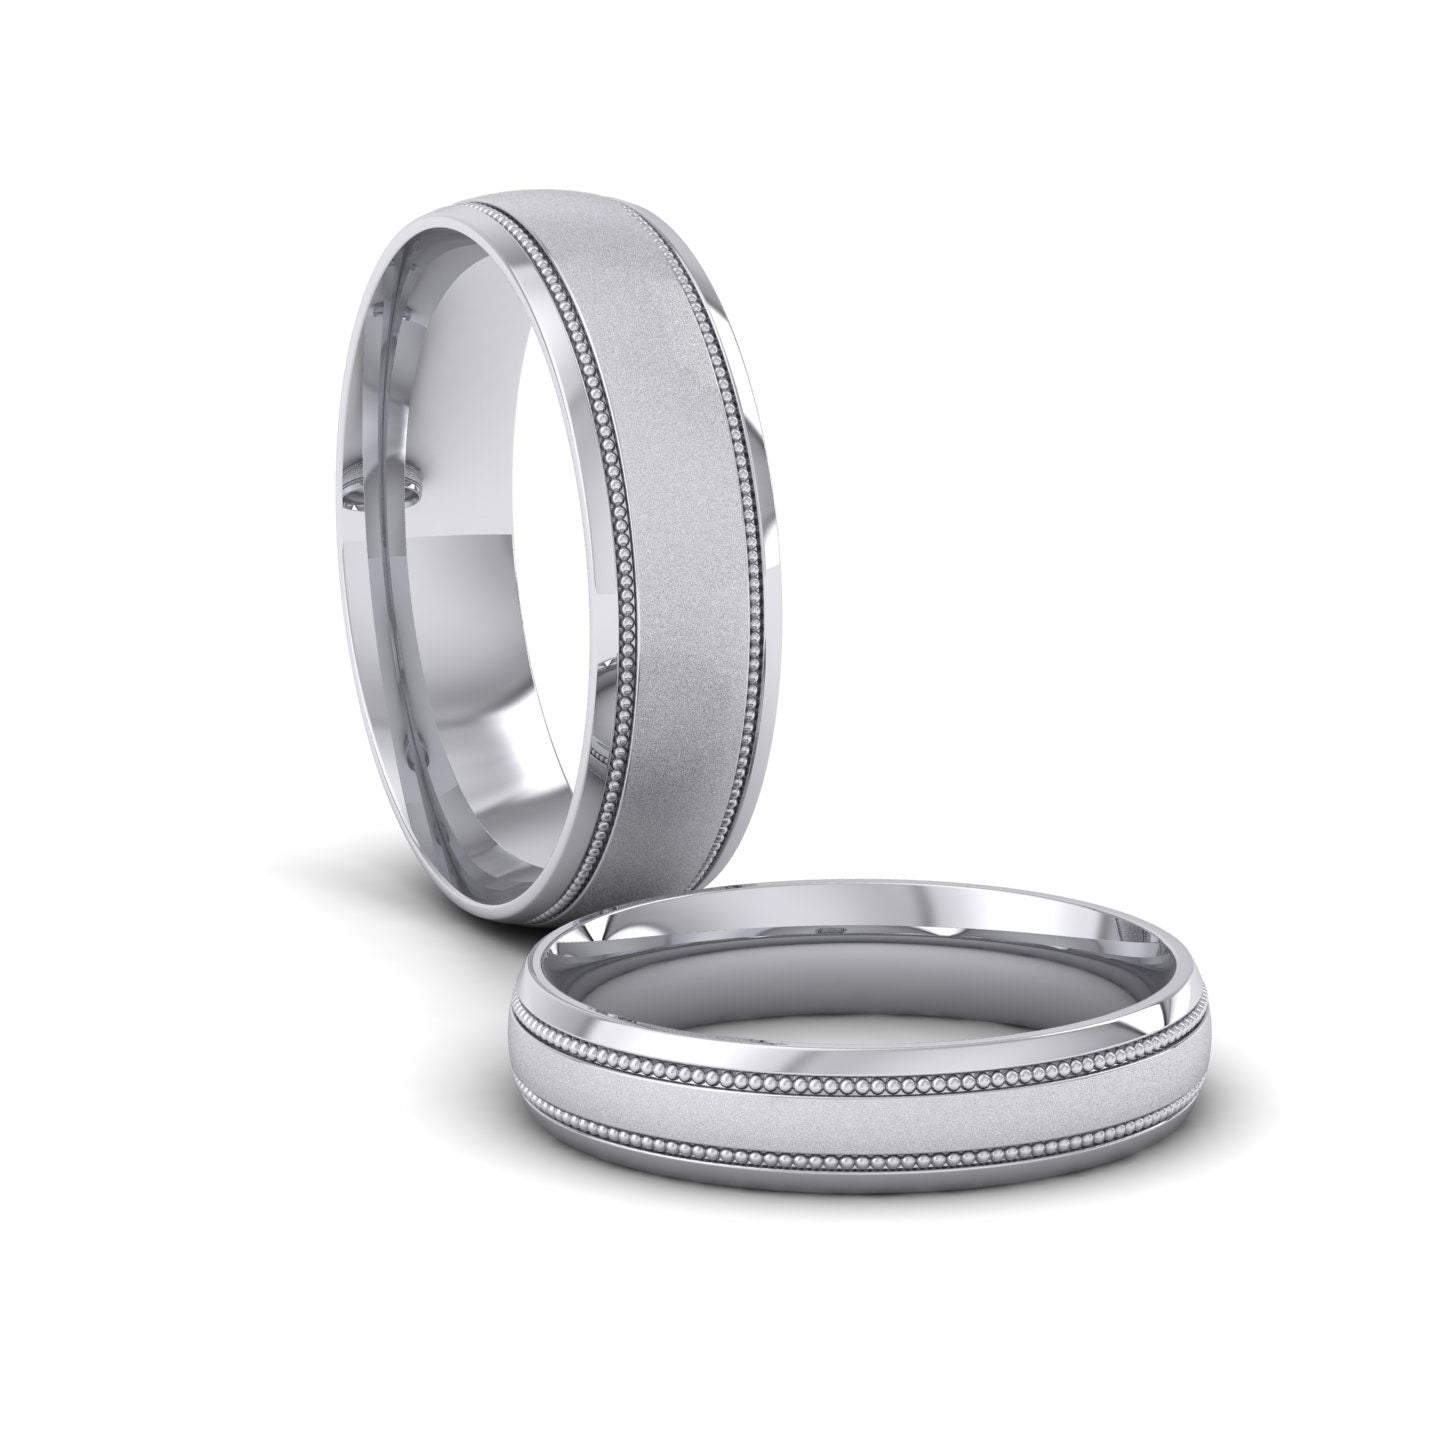 Millgrain And Contrasting Matt And Shiny Finish 950 Palladium 6mm Wedding Ring